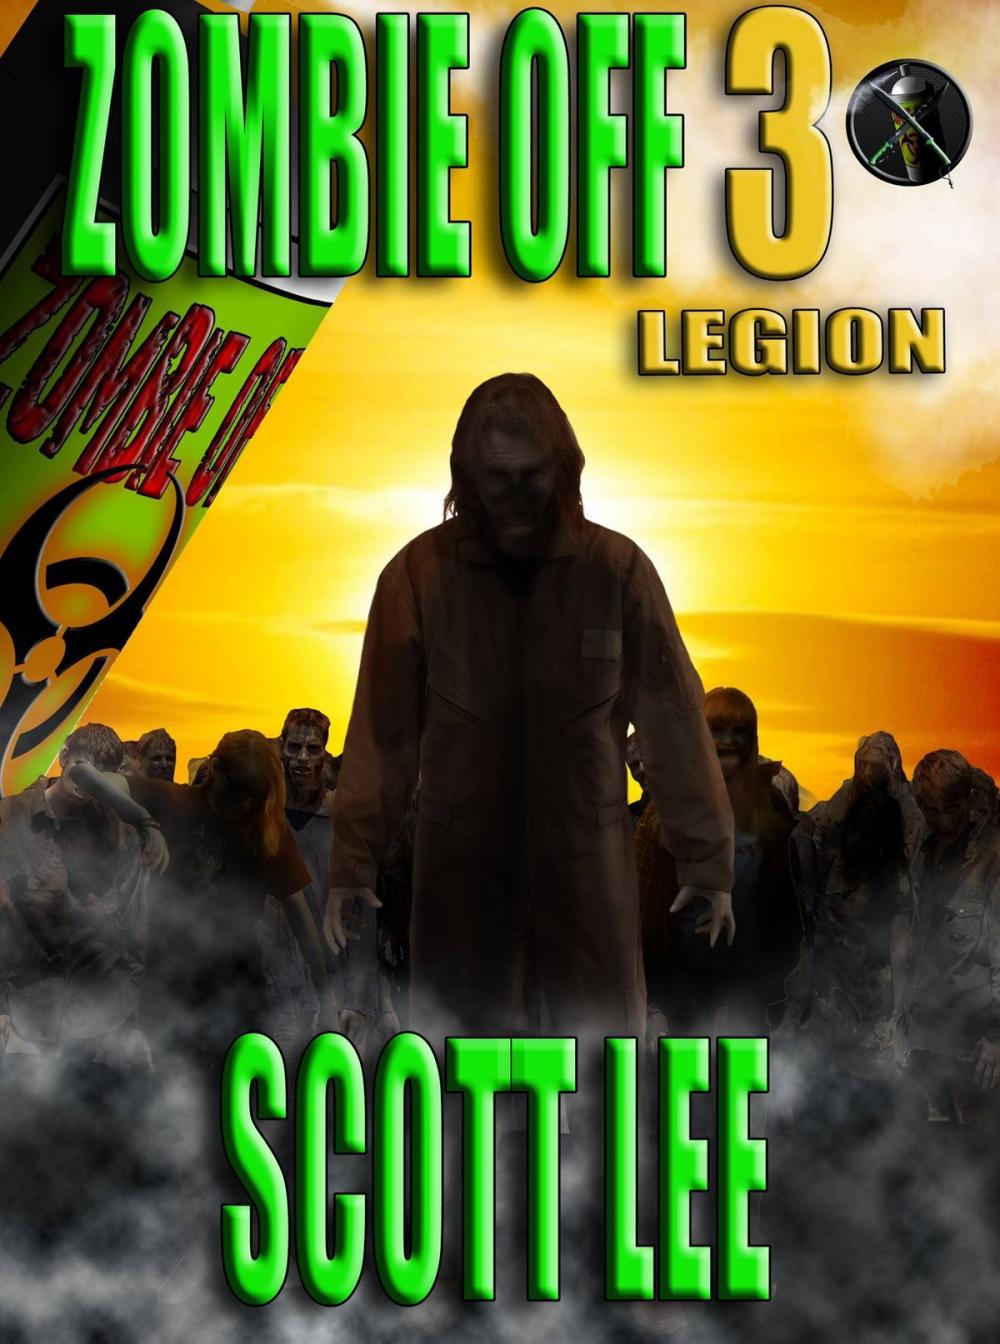 Big bigCover of Zombie Off 3: Legion